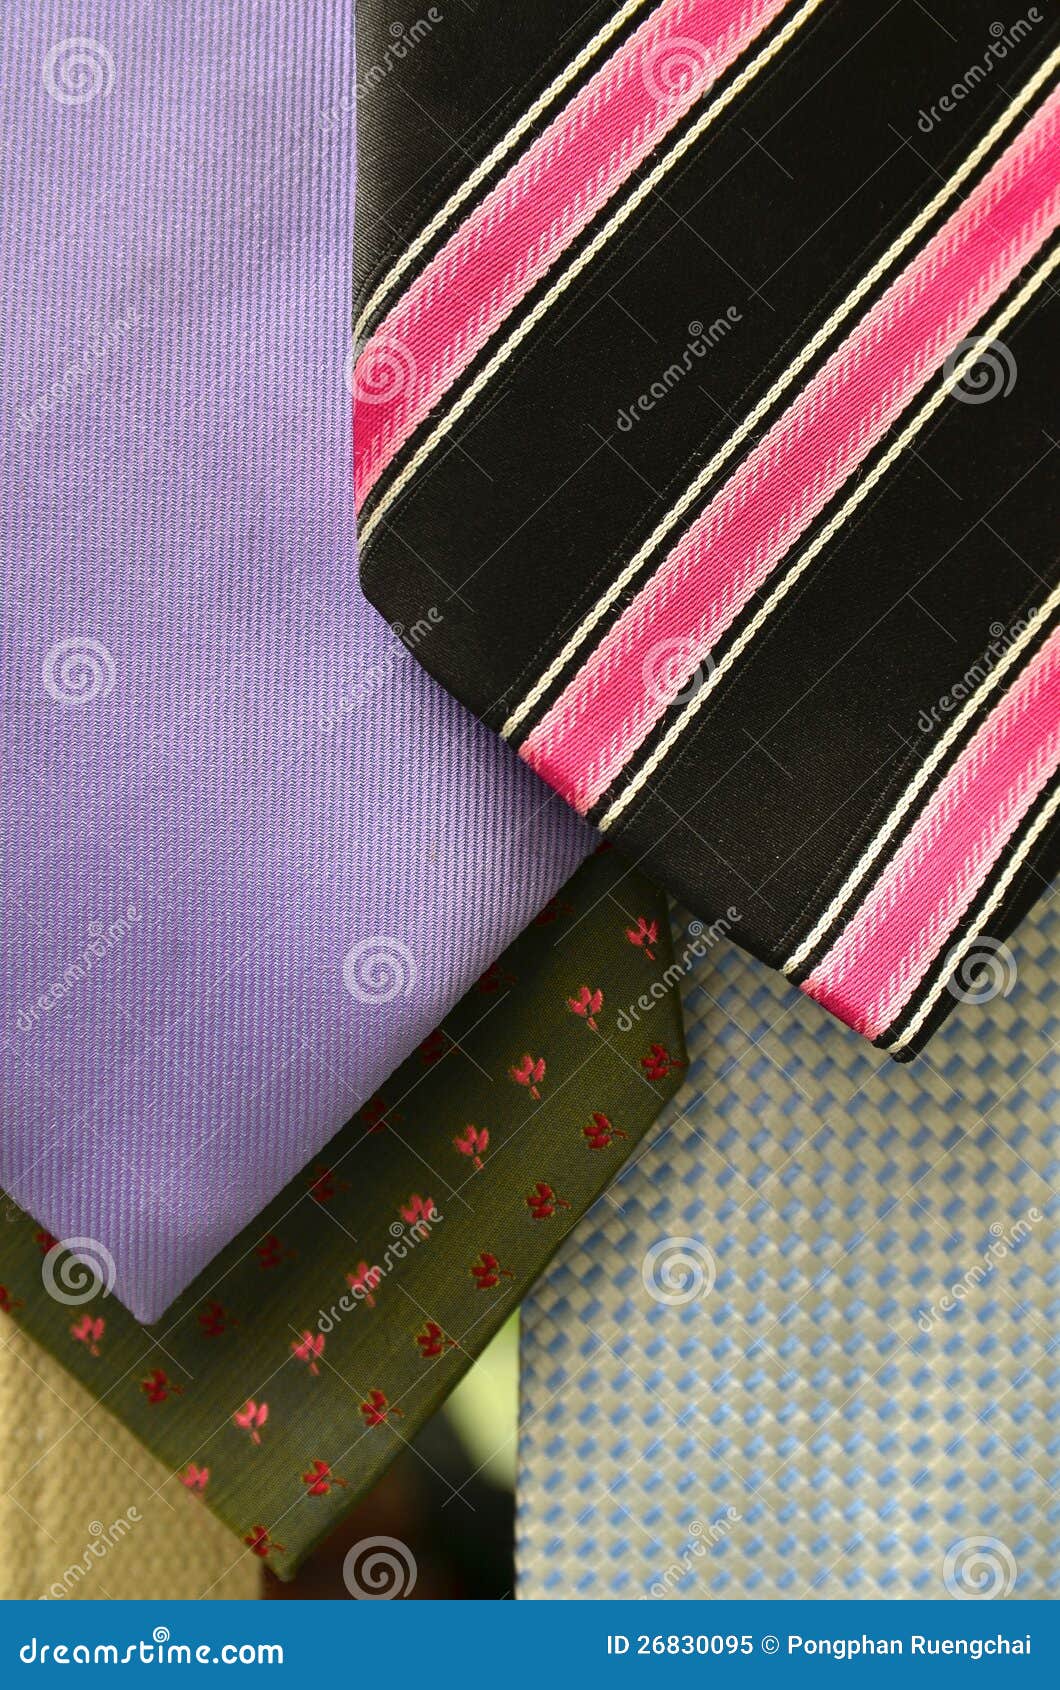 Necktie stock image. Image of fashion, necktie, business - 26830095